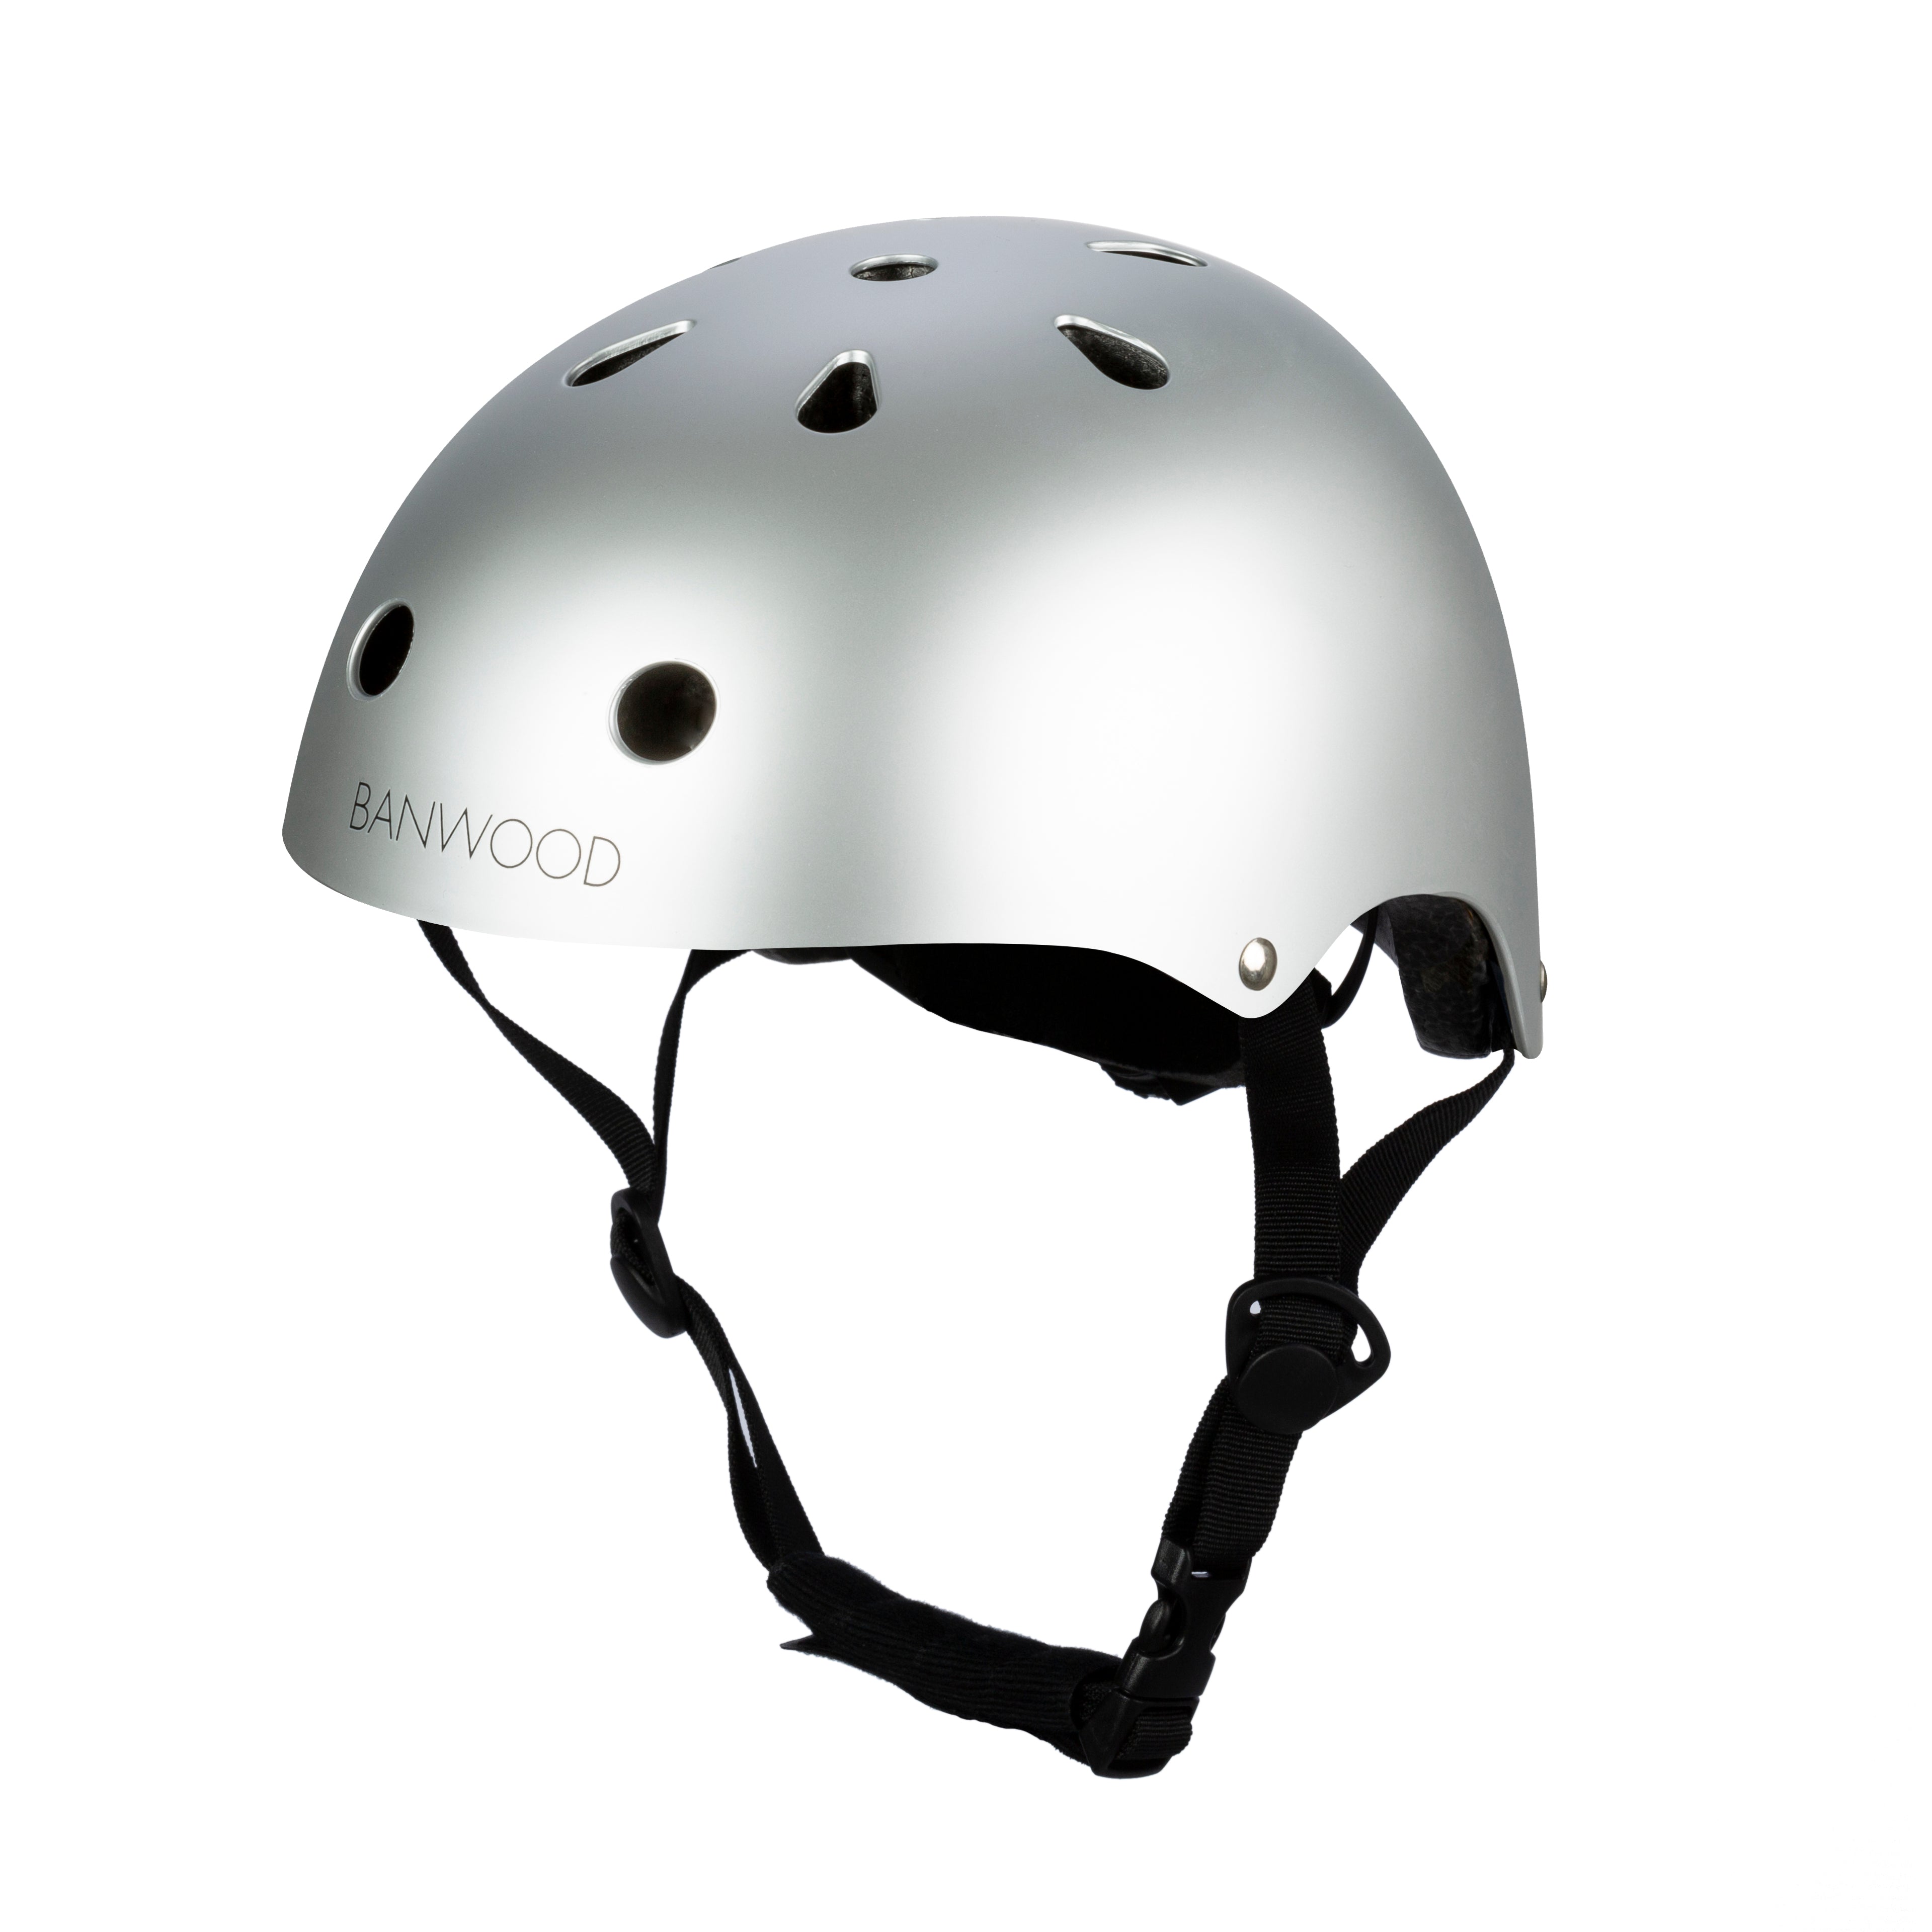 Classic Helmet - Chrome - XS